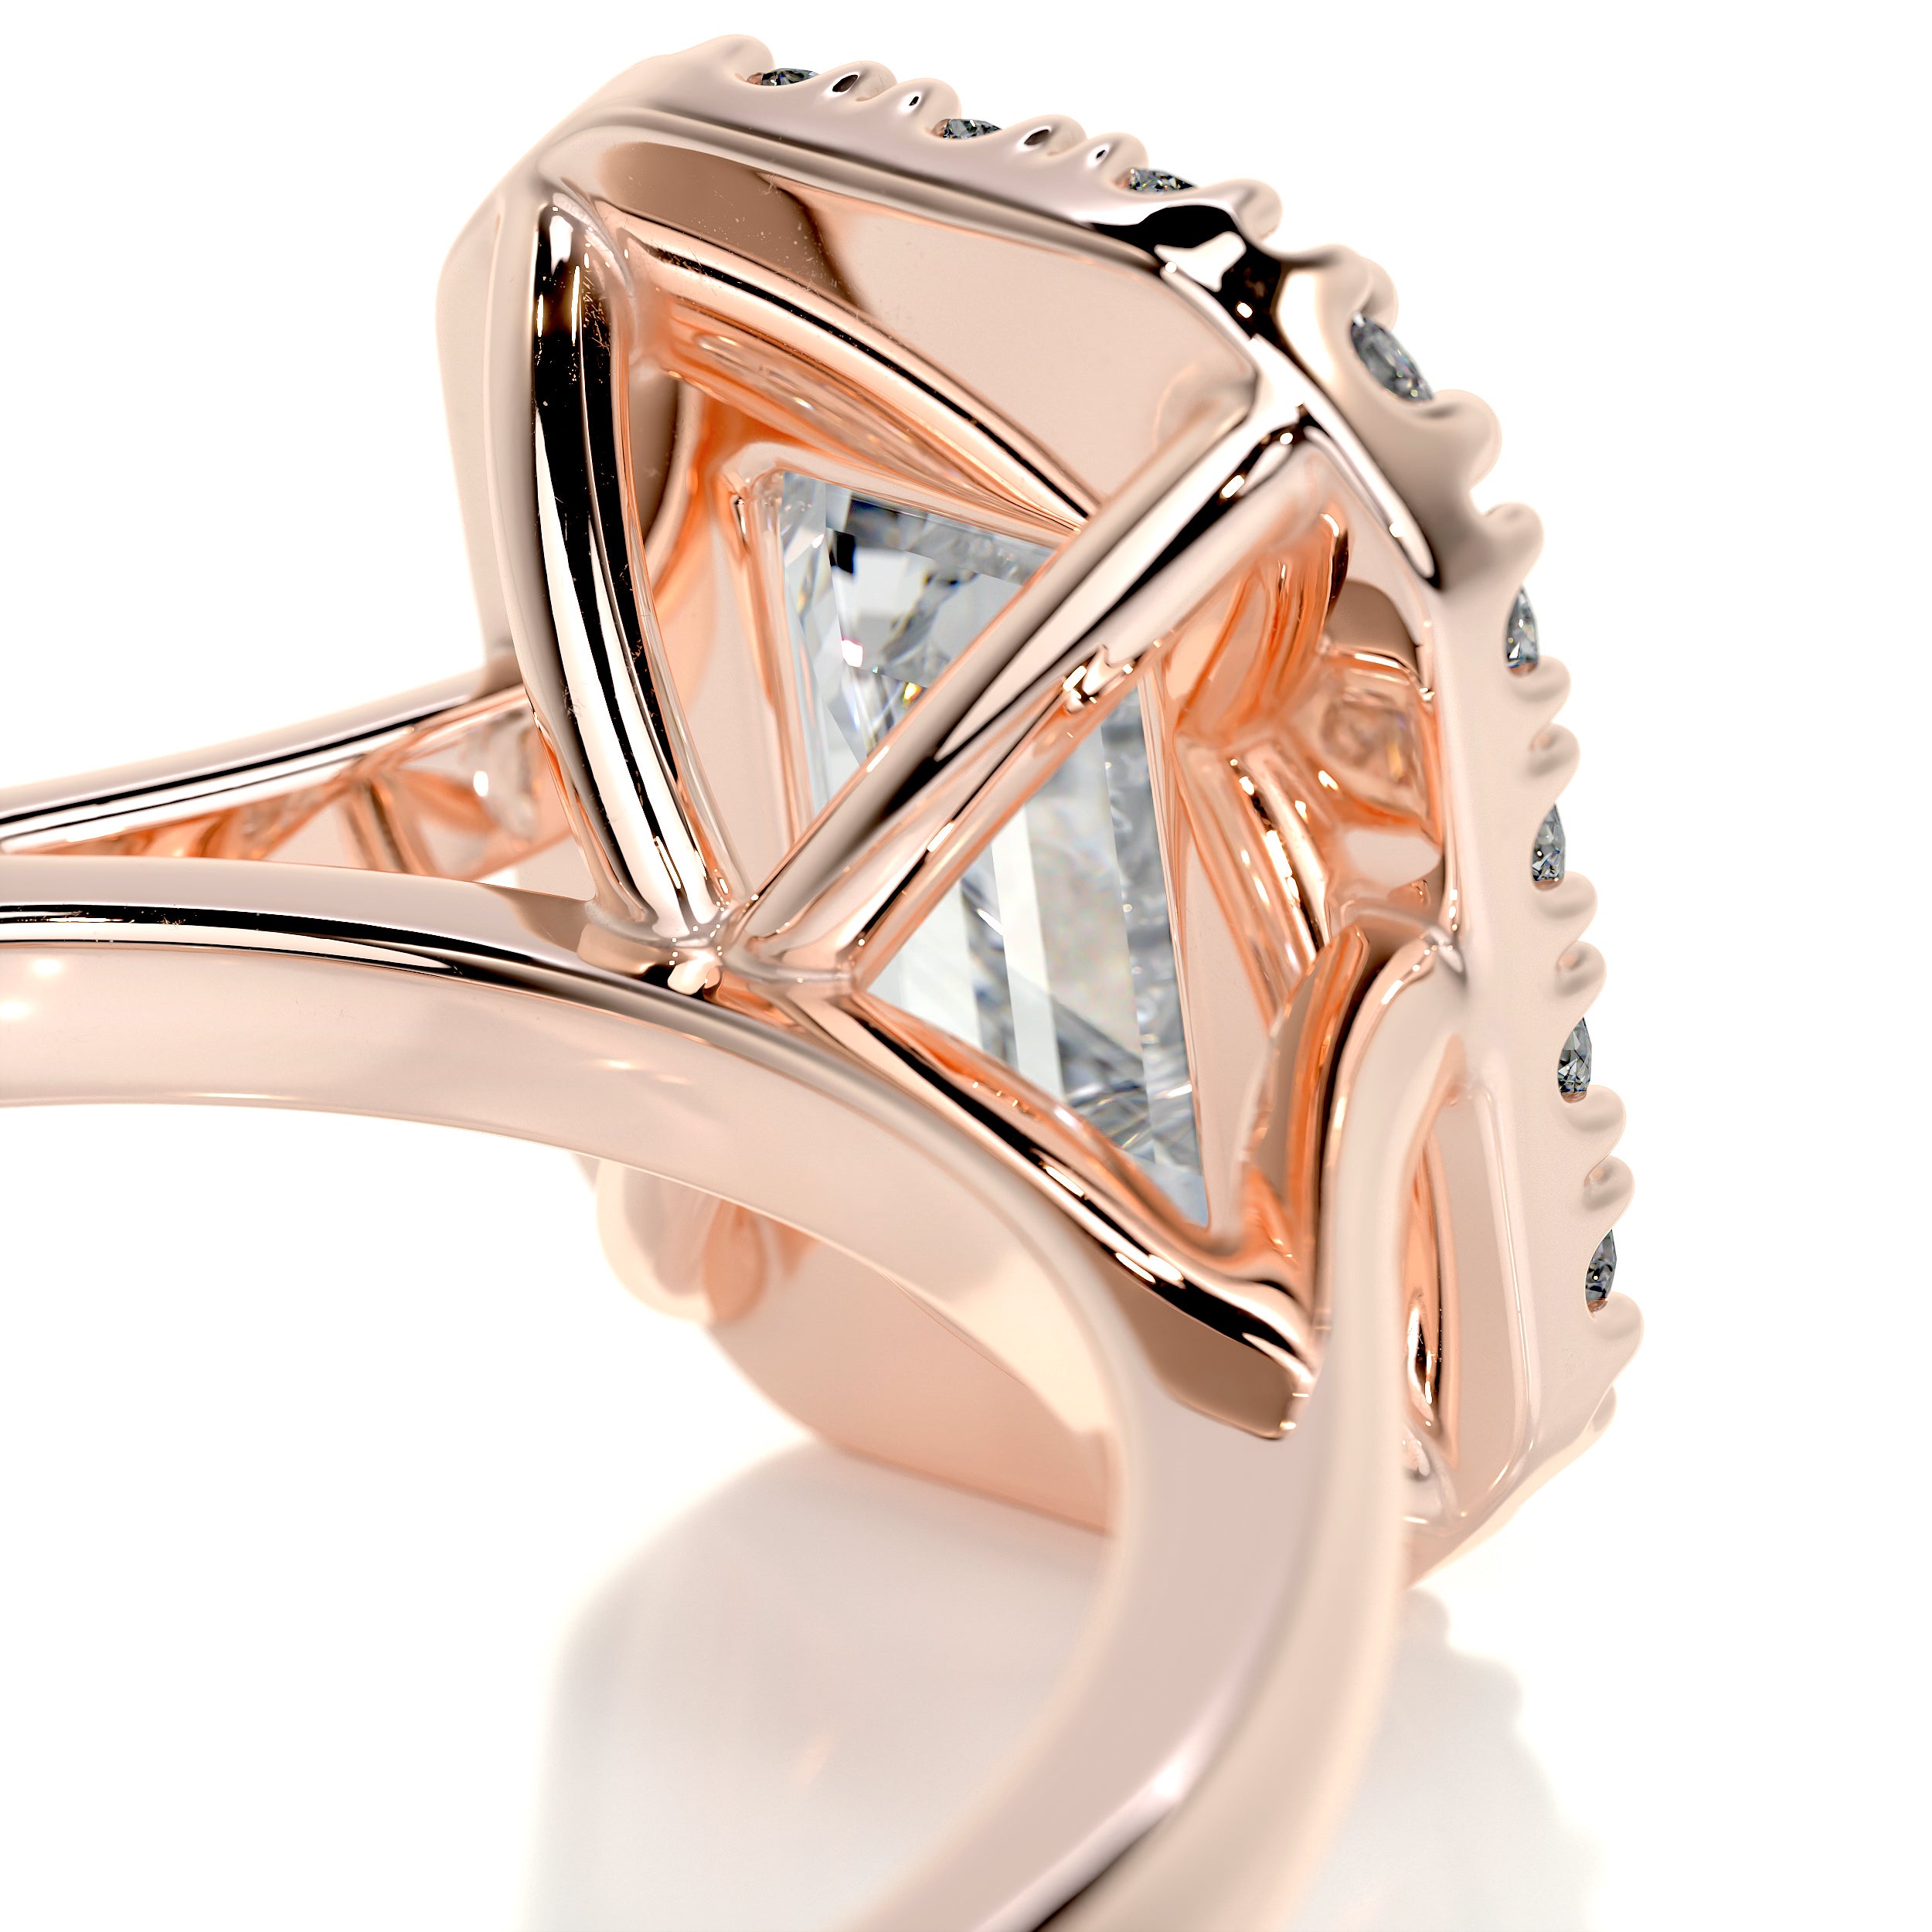 Vanessa Diamond Engagement Ring   (1.2 Carat) -14K Rose Gold